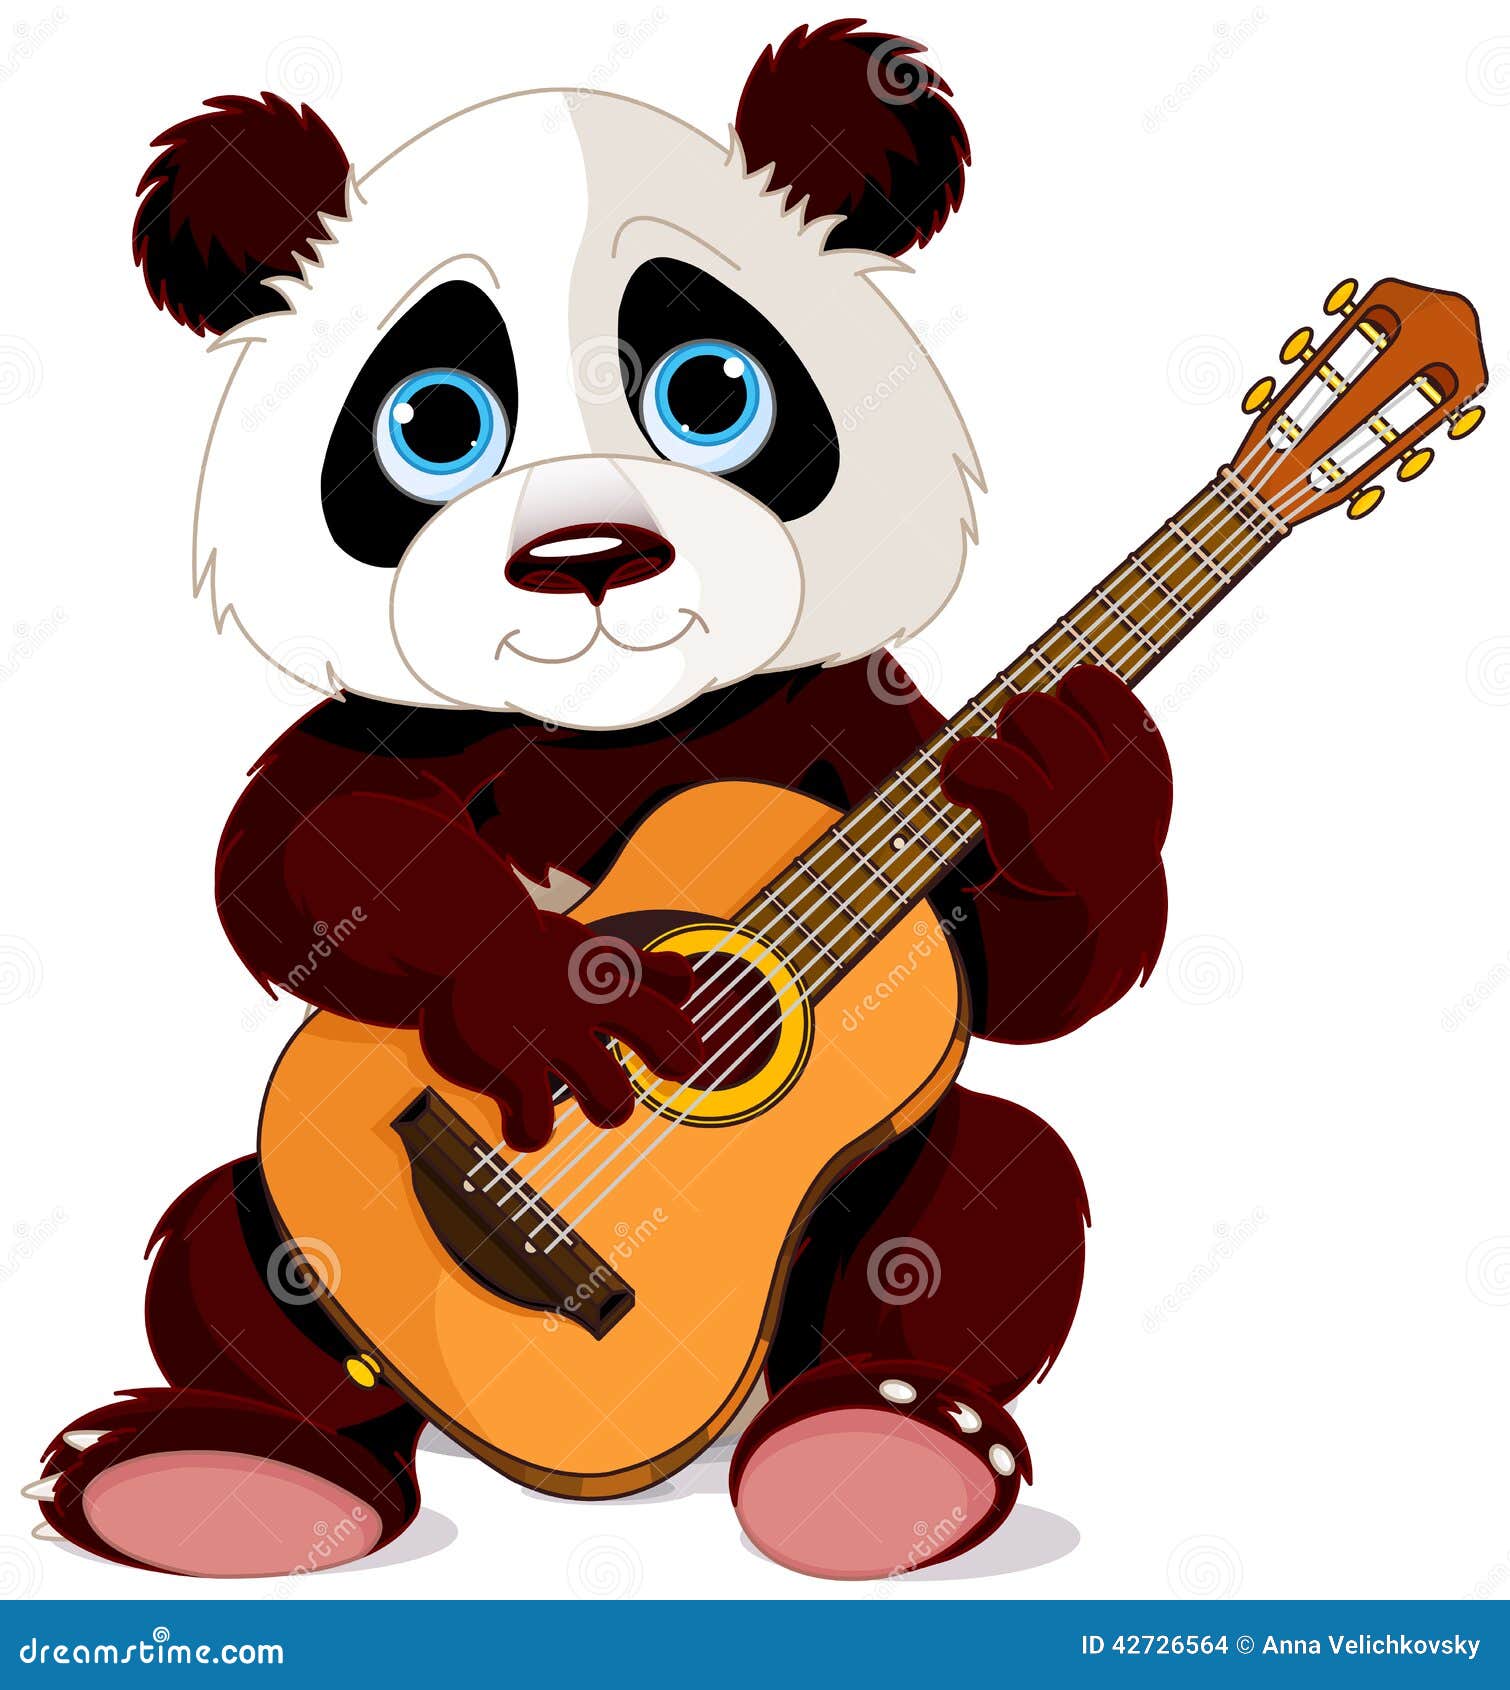 可爱的弹吉他熊猫插画素材 Cute Panda Playing Guitar Music Illustration – 设计小咖